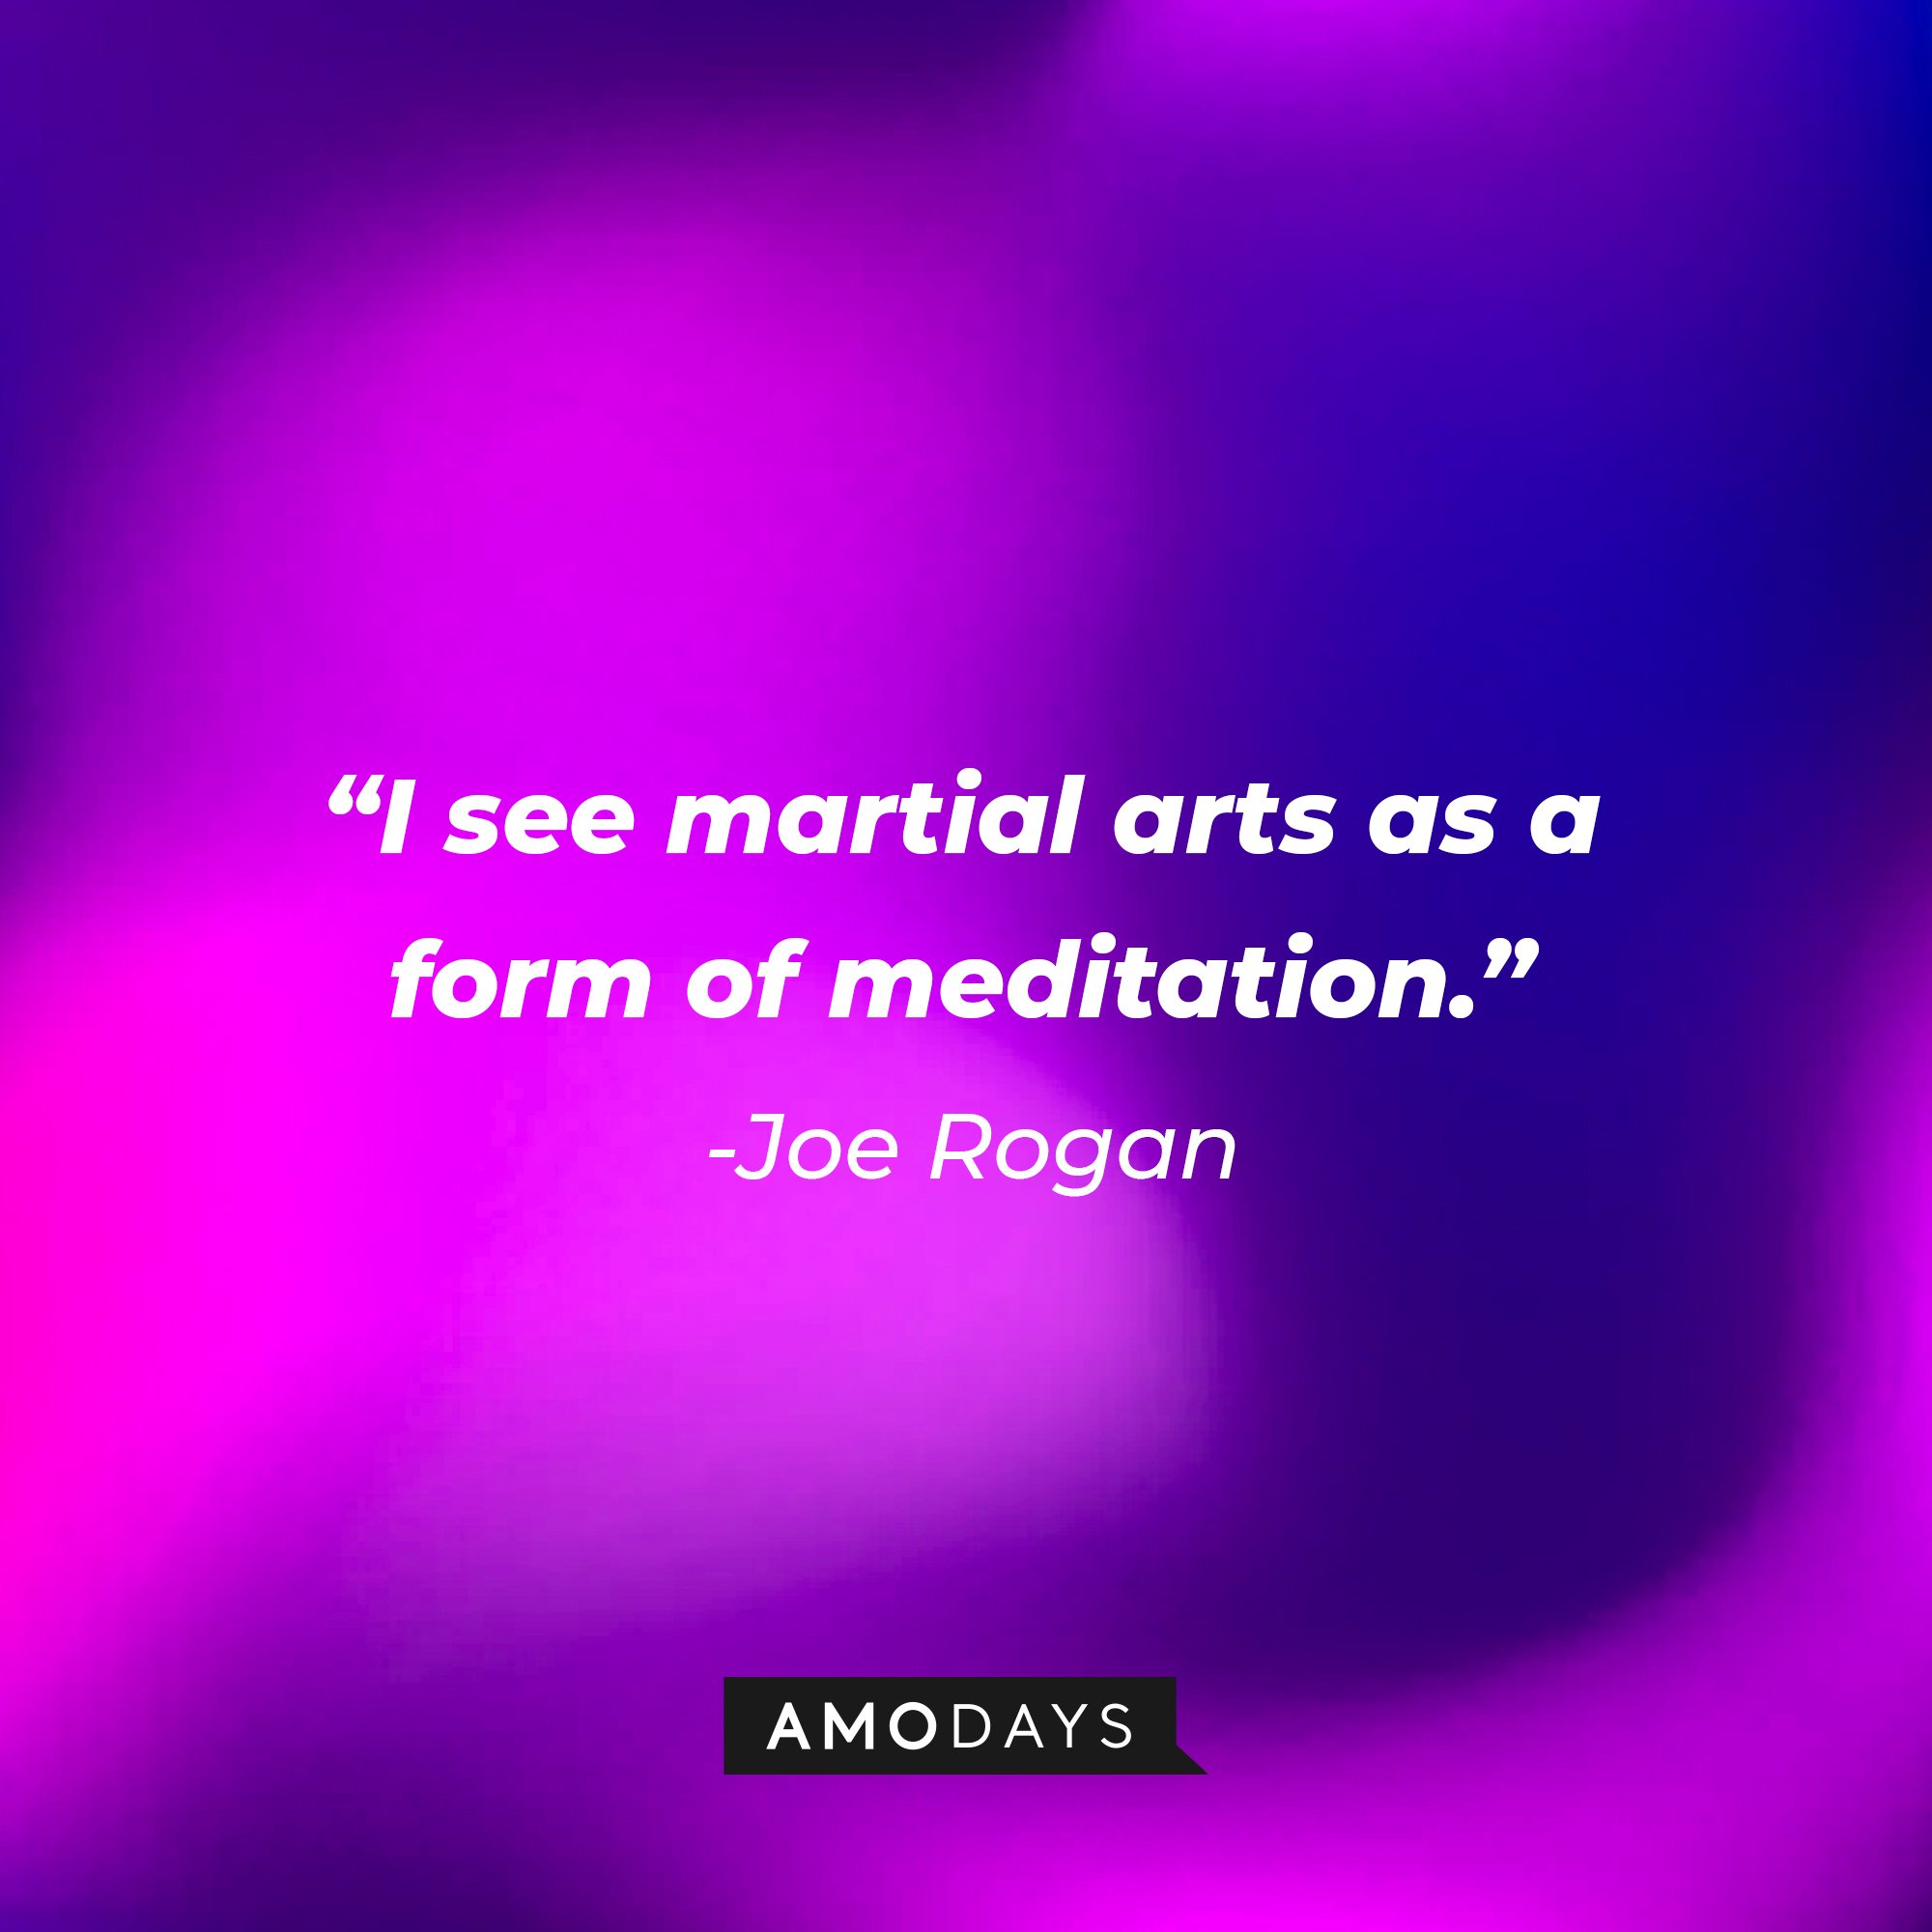  Joe Rogan's quote: "I see martial arts as a form of meditation." | Image: AmoDays